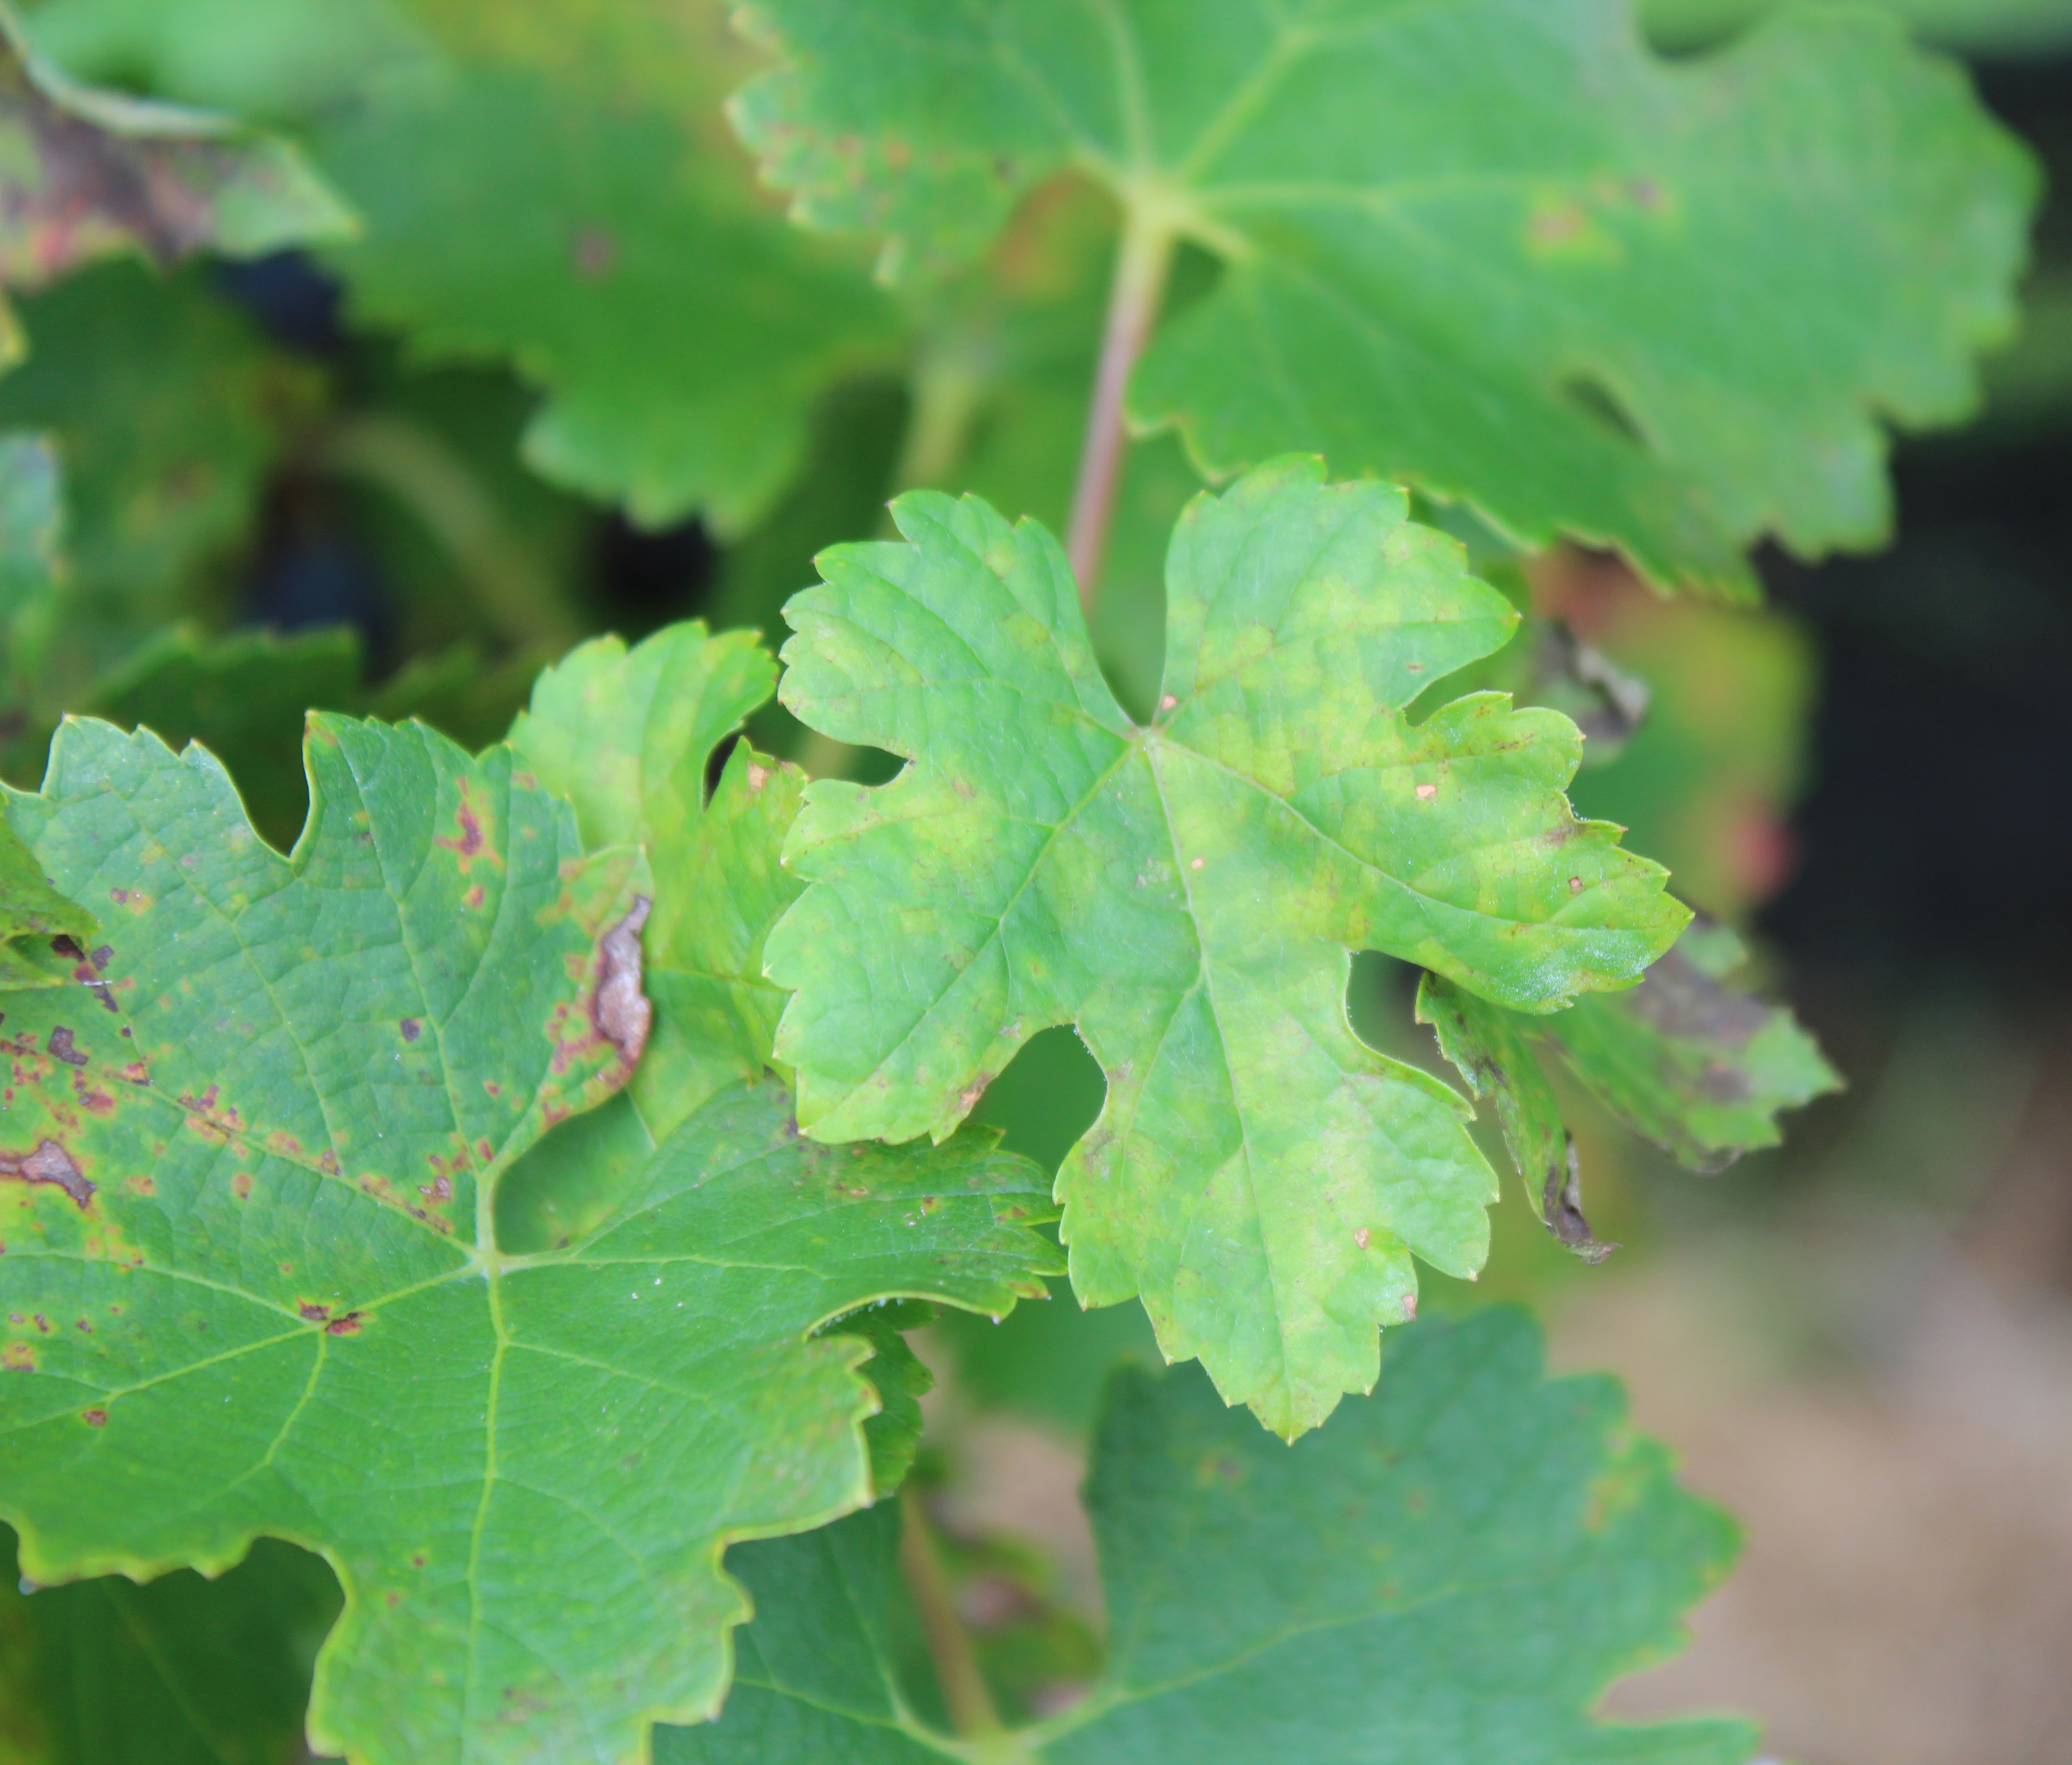 Downy mildew early symptoms on upper leaf surface. (Julie Beale, University of Kentucky)